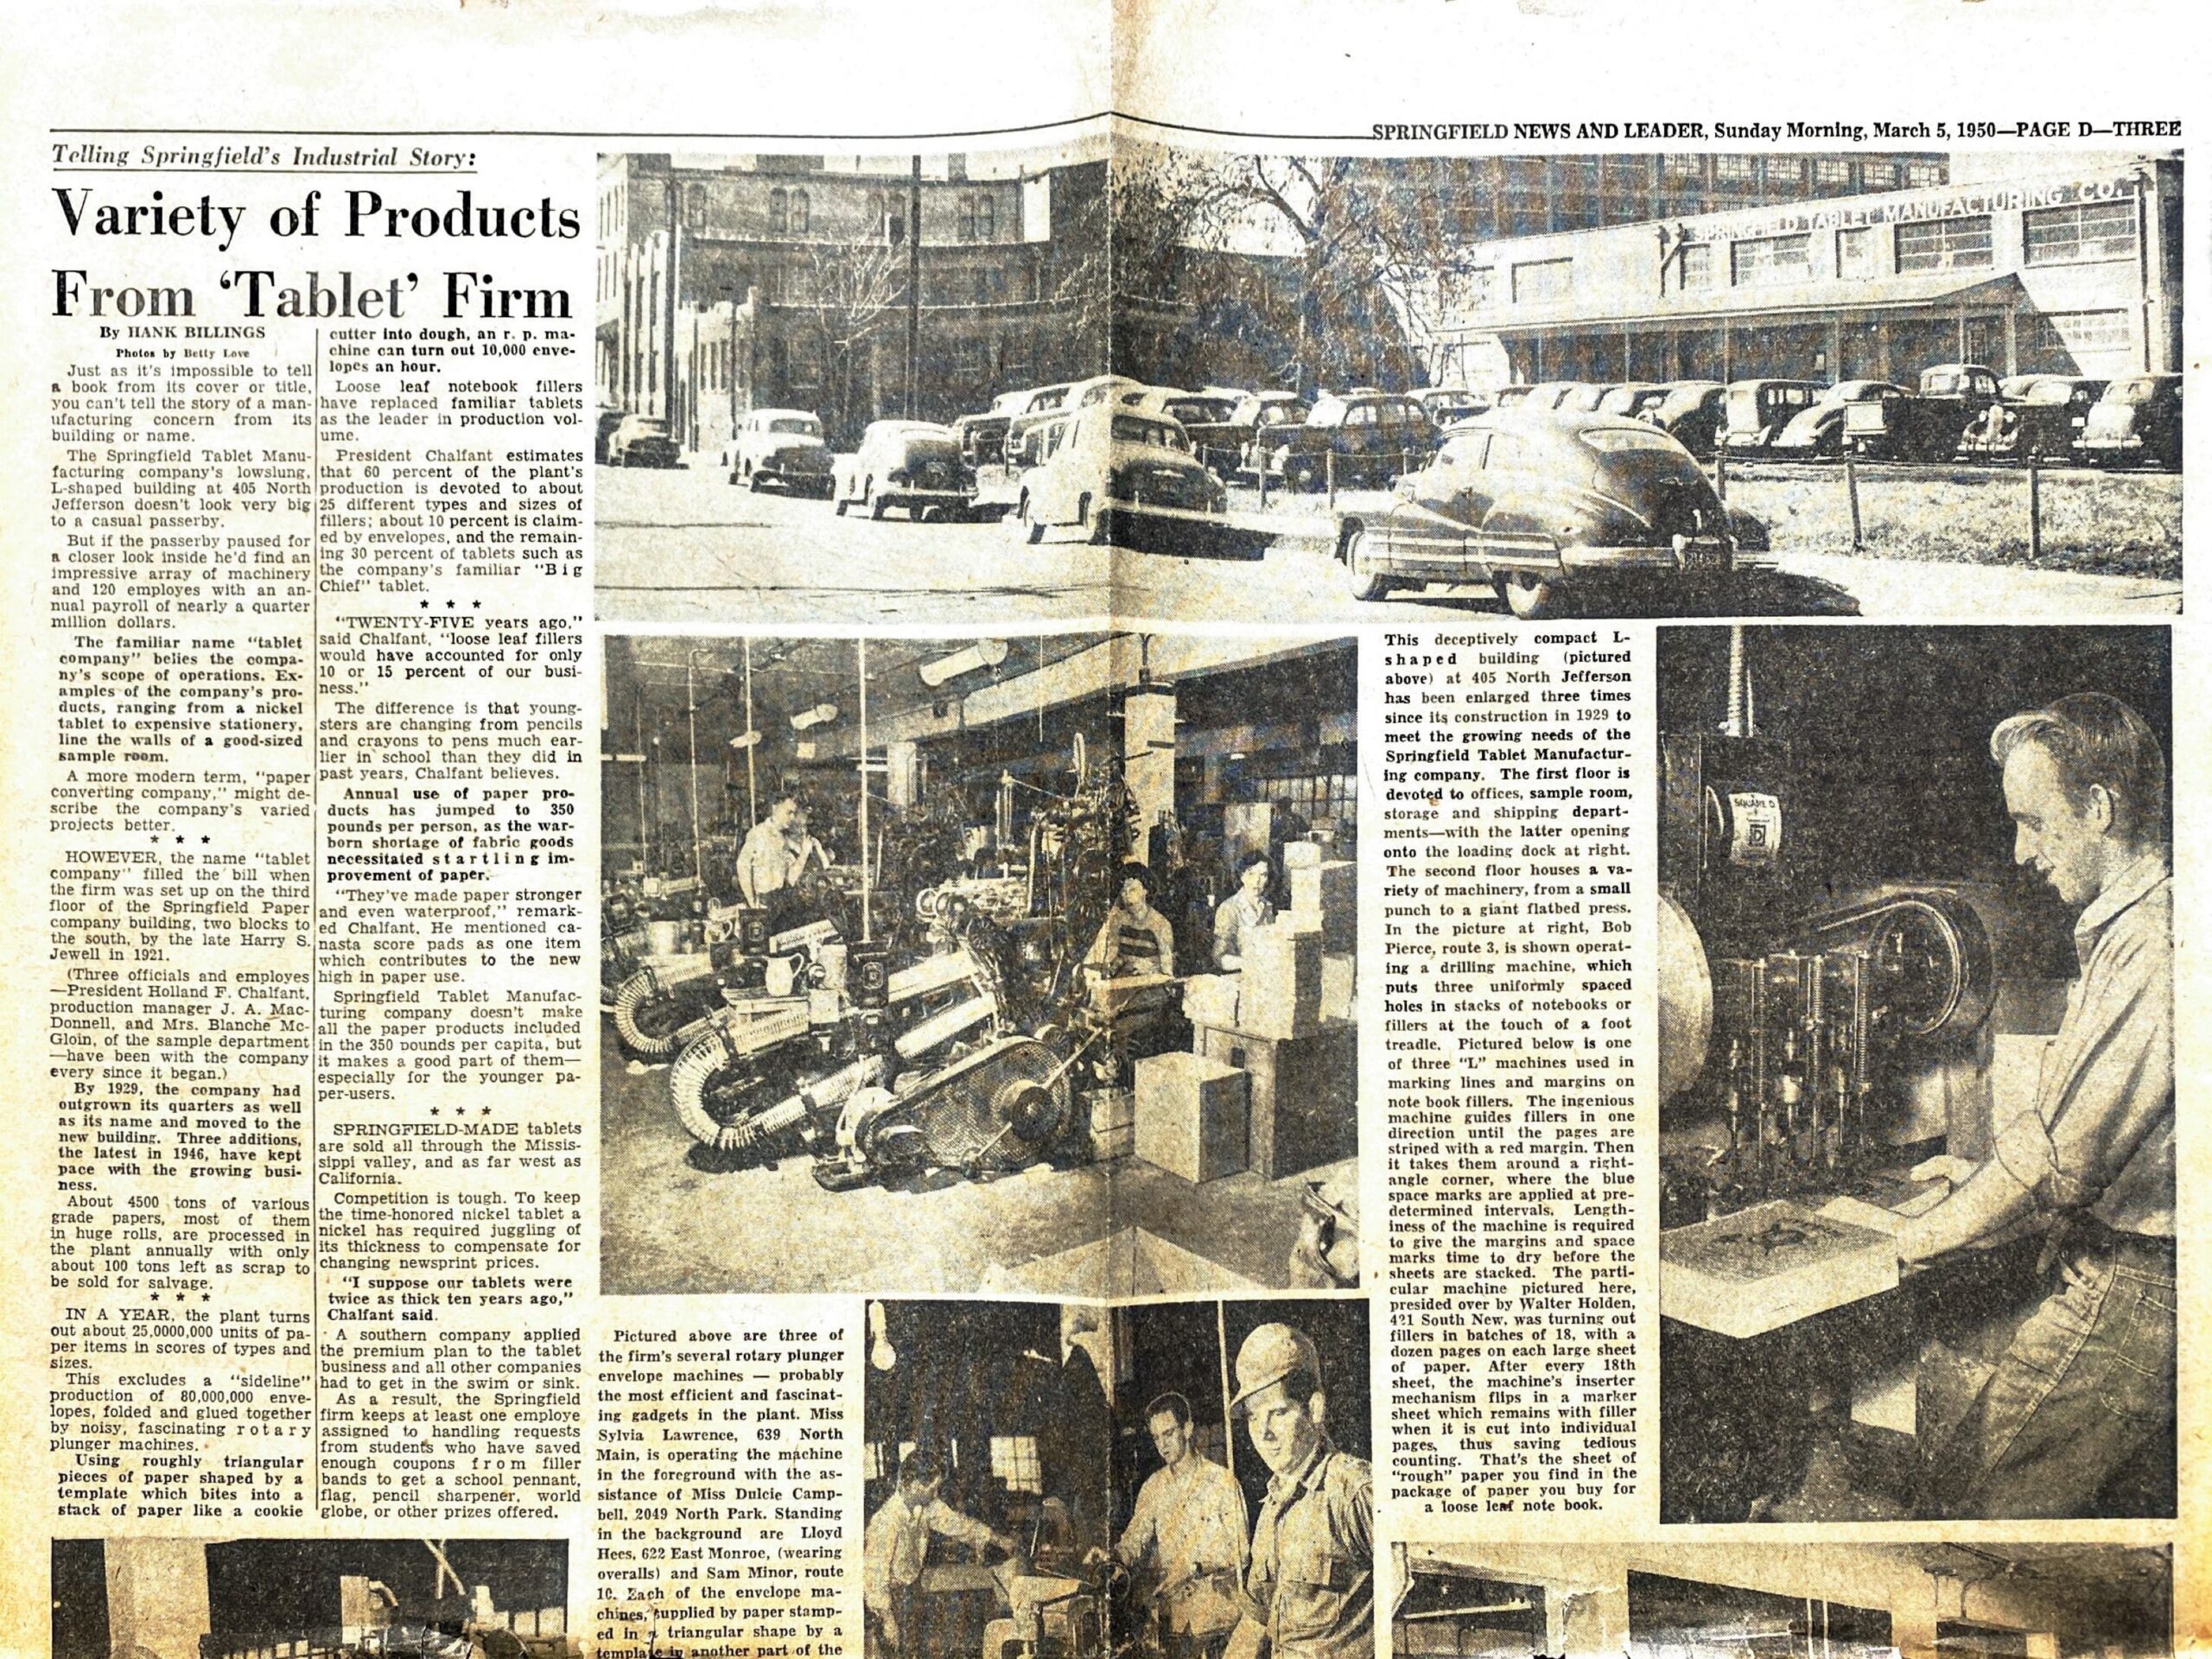 SPRINGFIELD NEWS LEADER, Sunday Morning, March 5, 1950